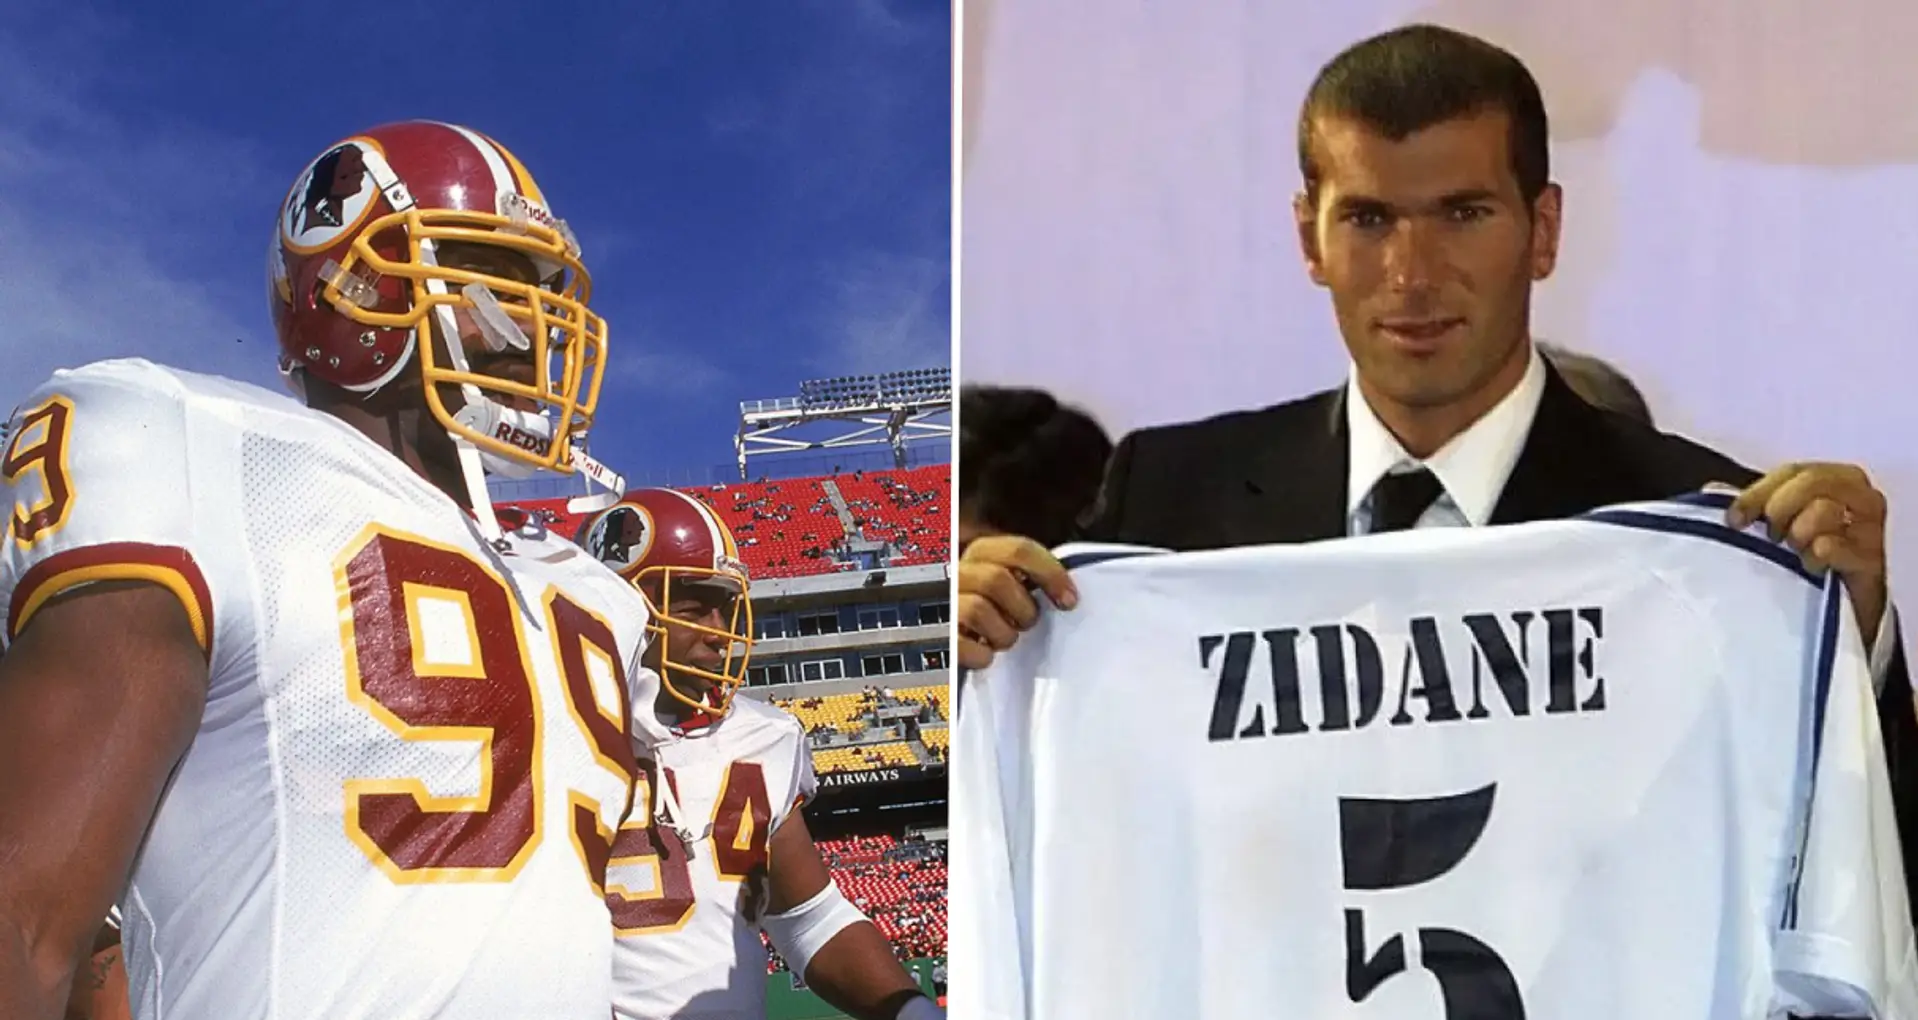 Why Zinedine Zidane chose no.5 jersey over no. 21 at Real Madrid?